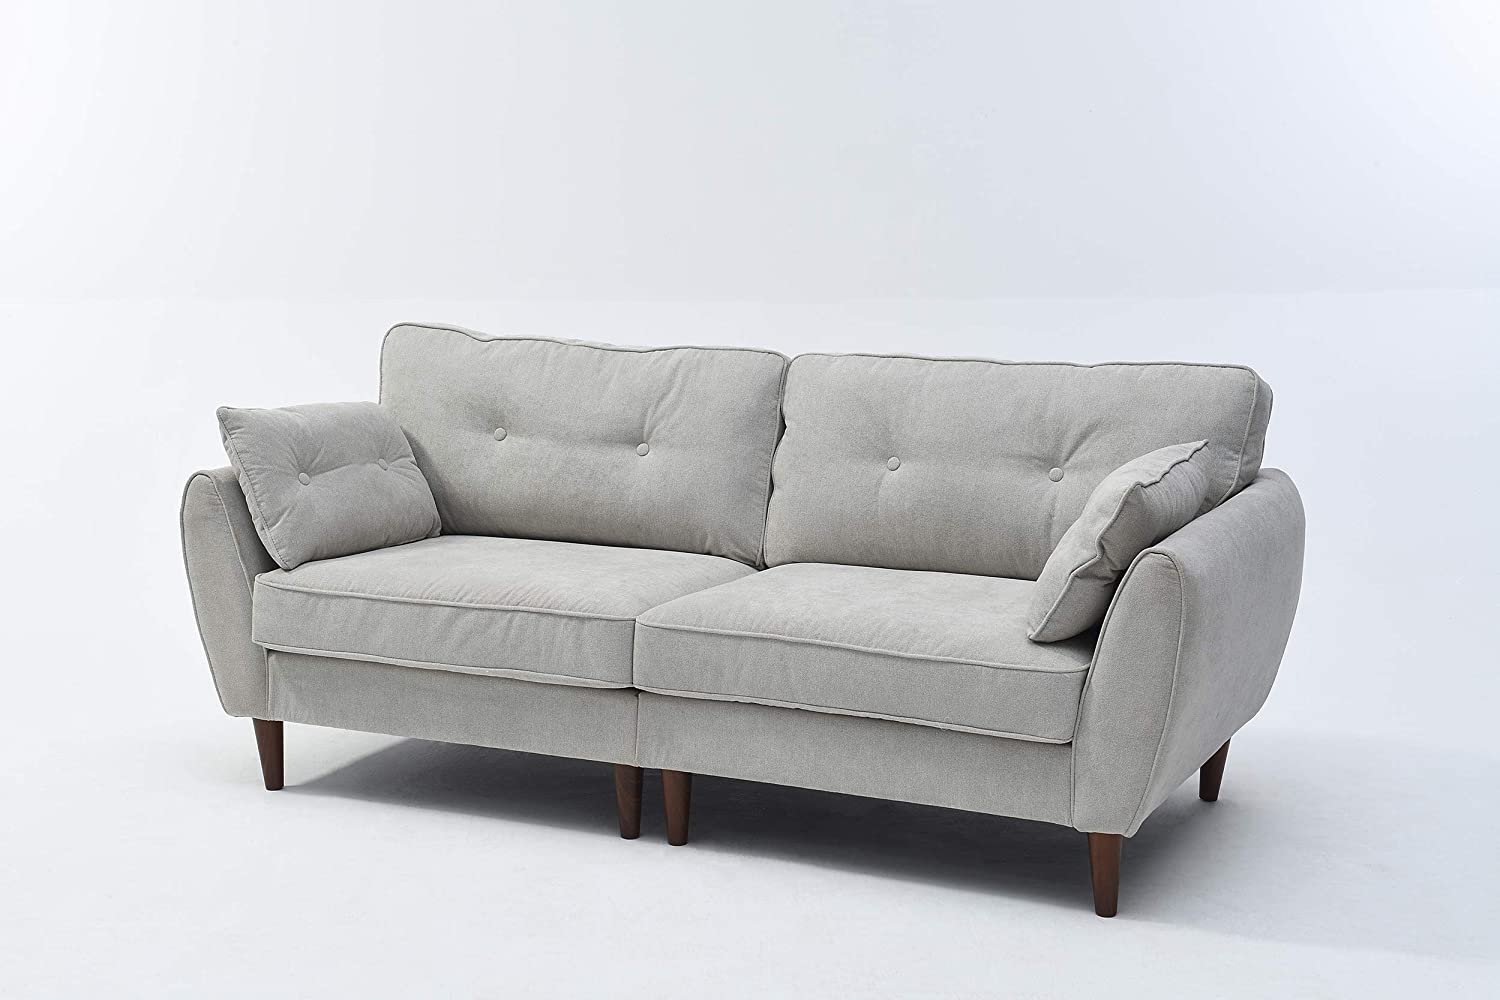 Brooks Fabric Sofa range in Stone Beige